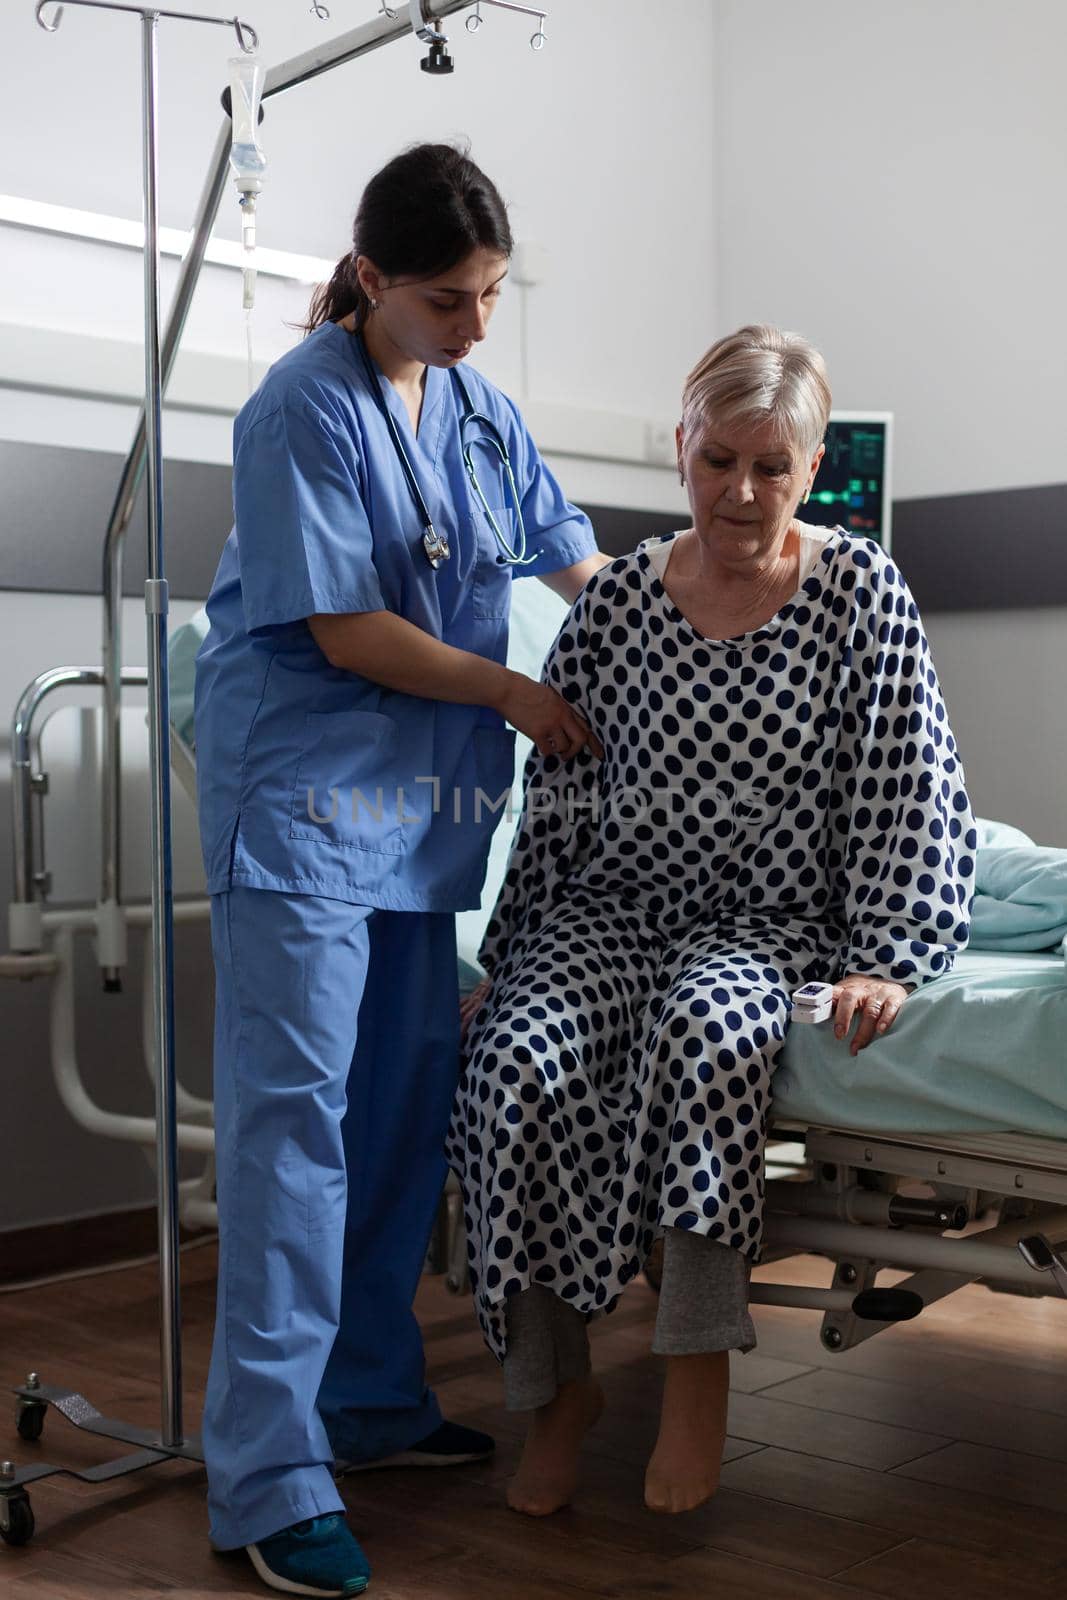 Medical nurse in scrubs helping senior woman in hospital room by DCStudio